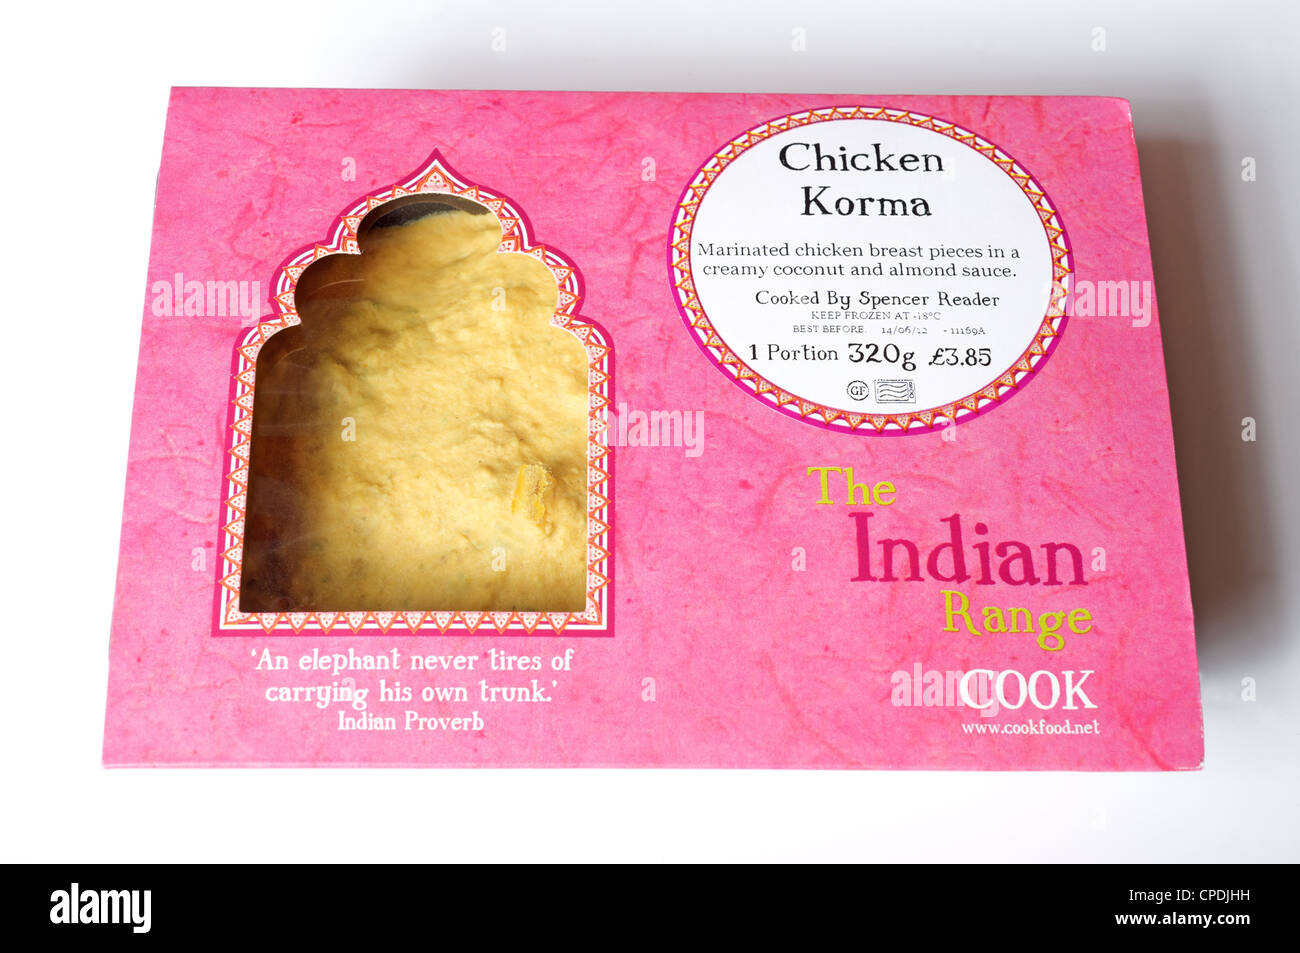 The Indian Range chicken Korma Stock Photo